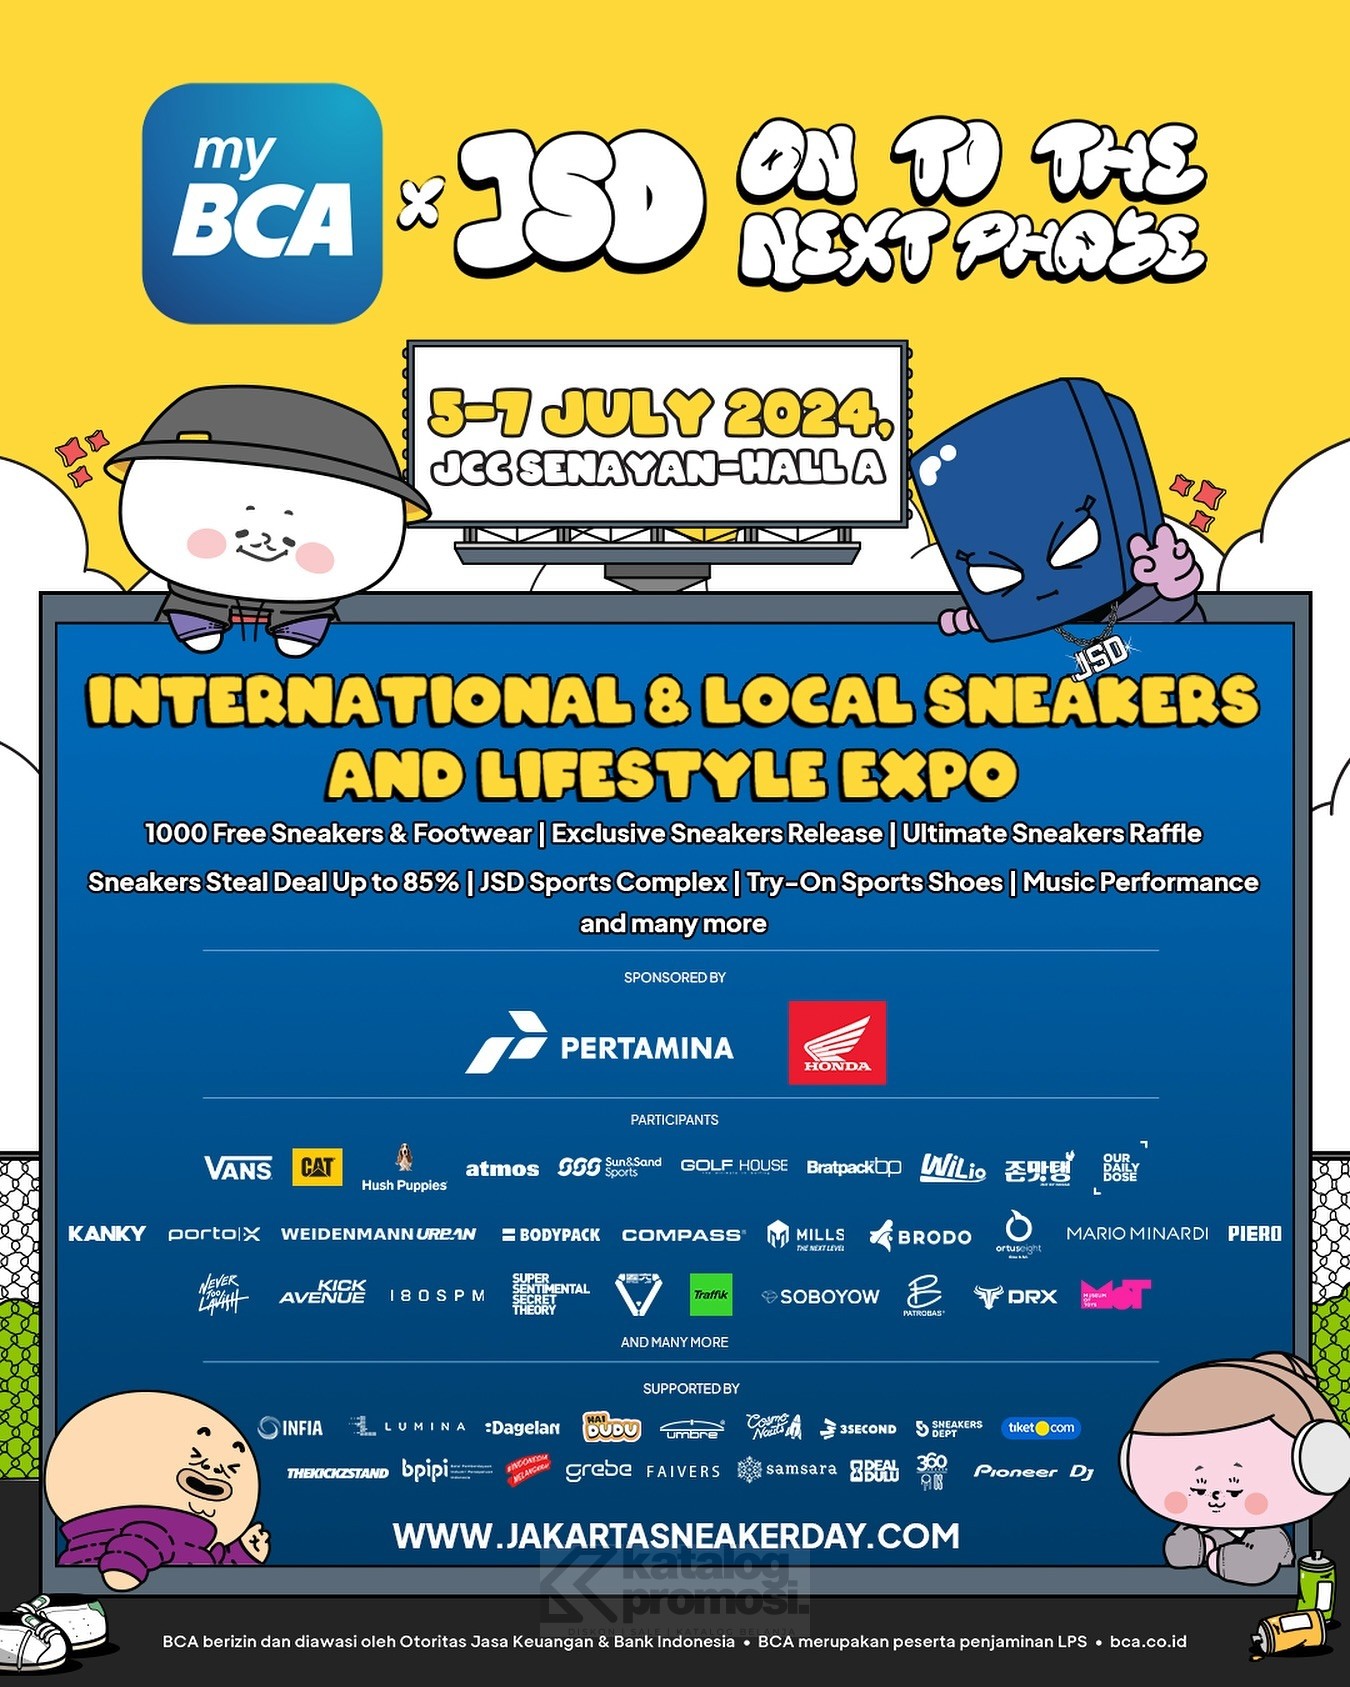 myBCA x Jakarta Sneakers Day 2024 mulai tanggal 05-07 Juli 2024 di Hall A, Jakarta Convention Center